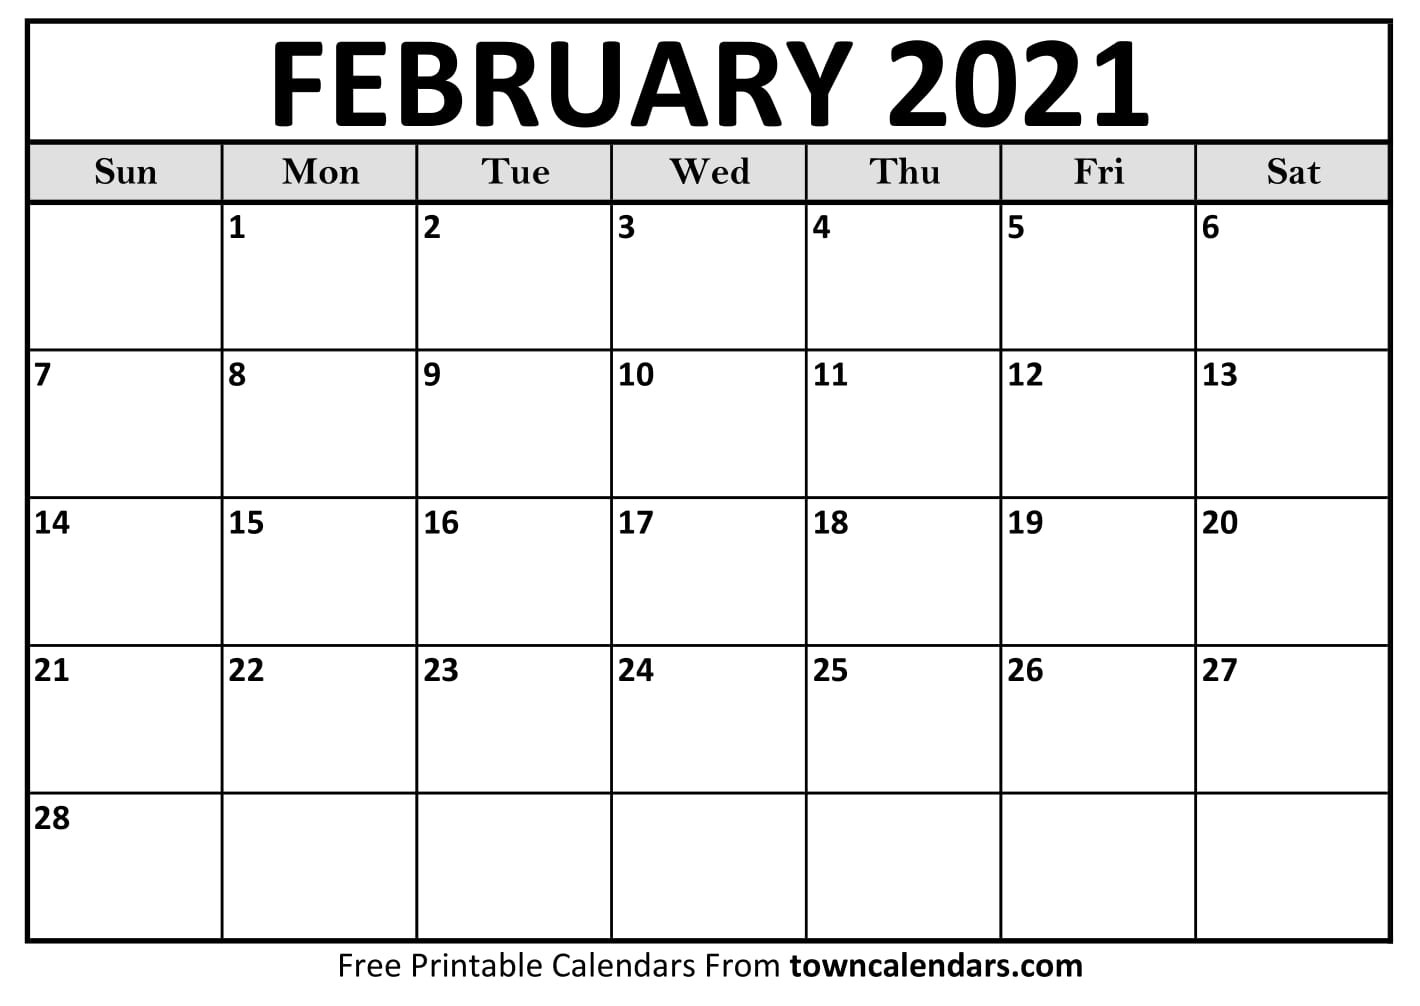 Printable February 2021 Calendar - Towncalendars-Calendar Templates 2021 February